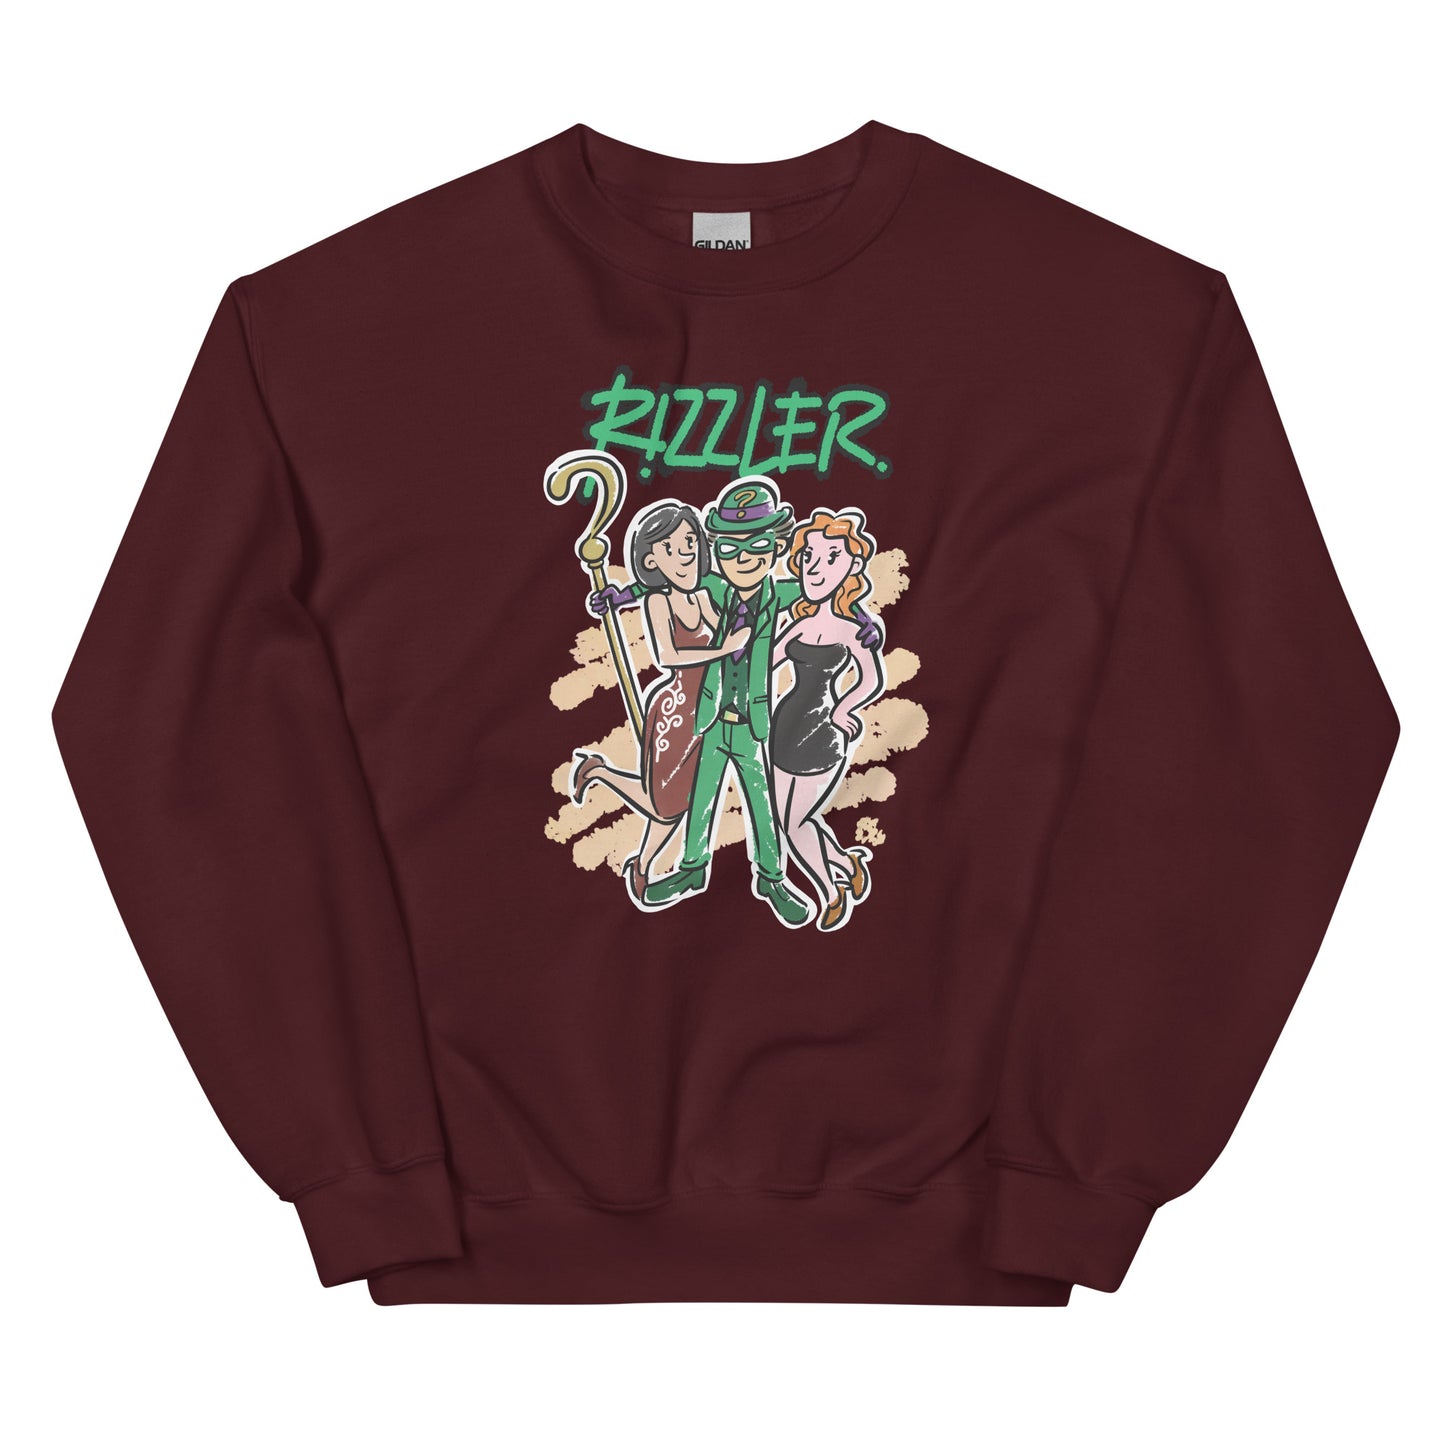 The Rizzler Unisex Sweatshirt